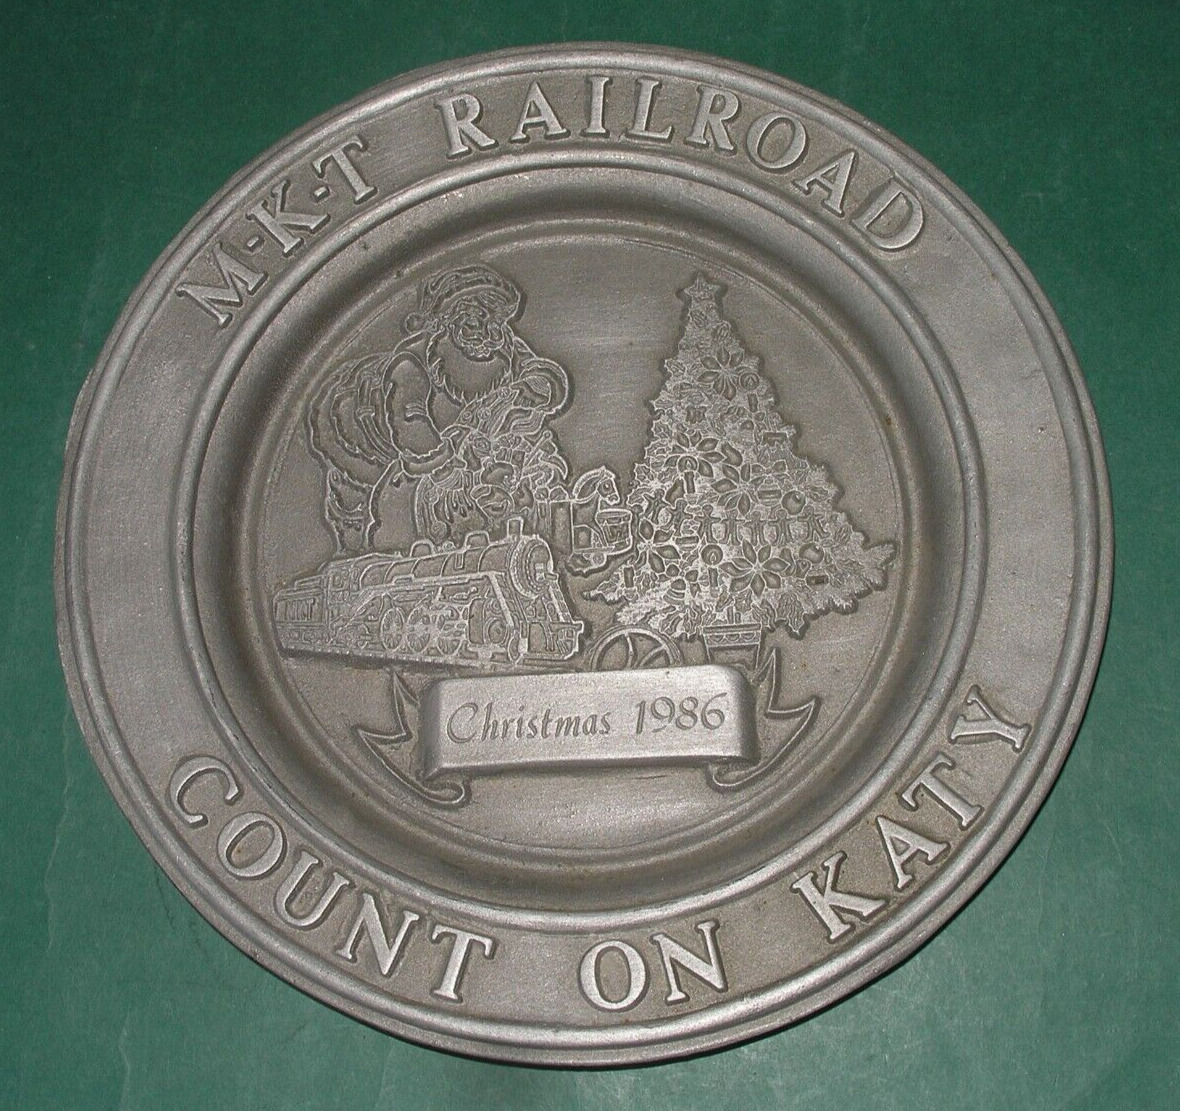 MKT Railroad Count on Katy Pewter Plate Christmas 1986 Metal 9 1/2” Diameter